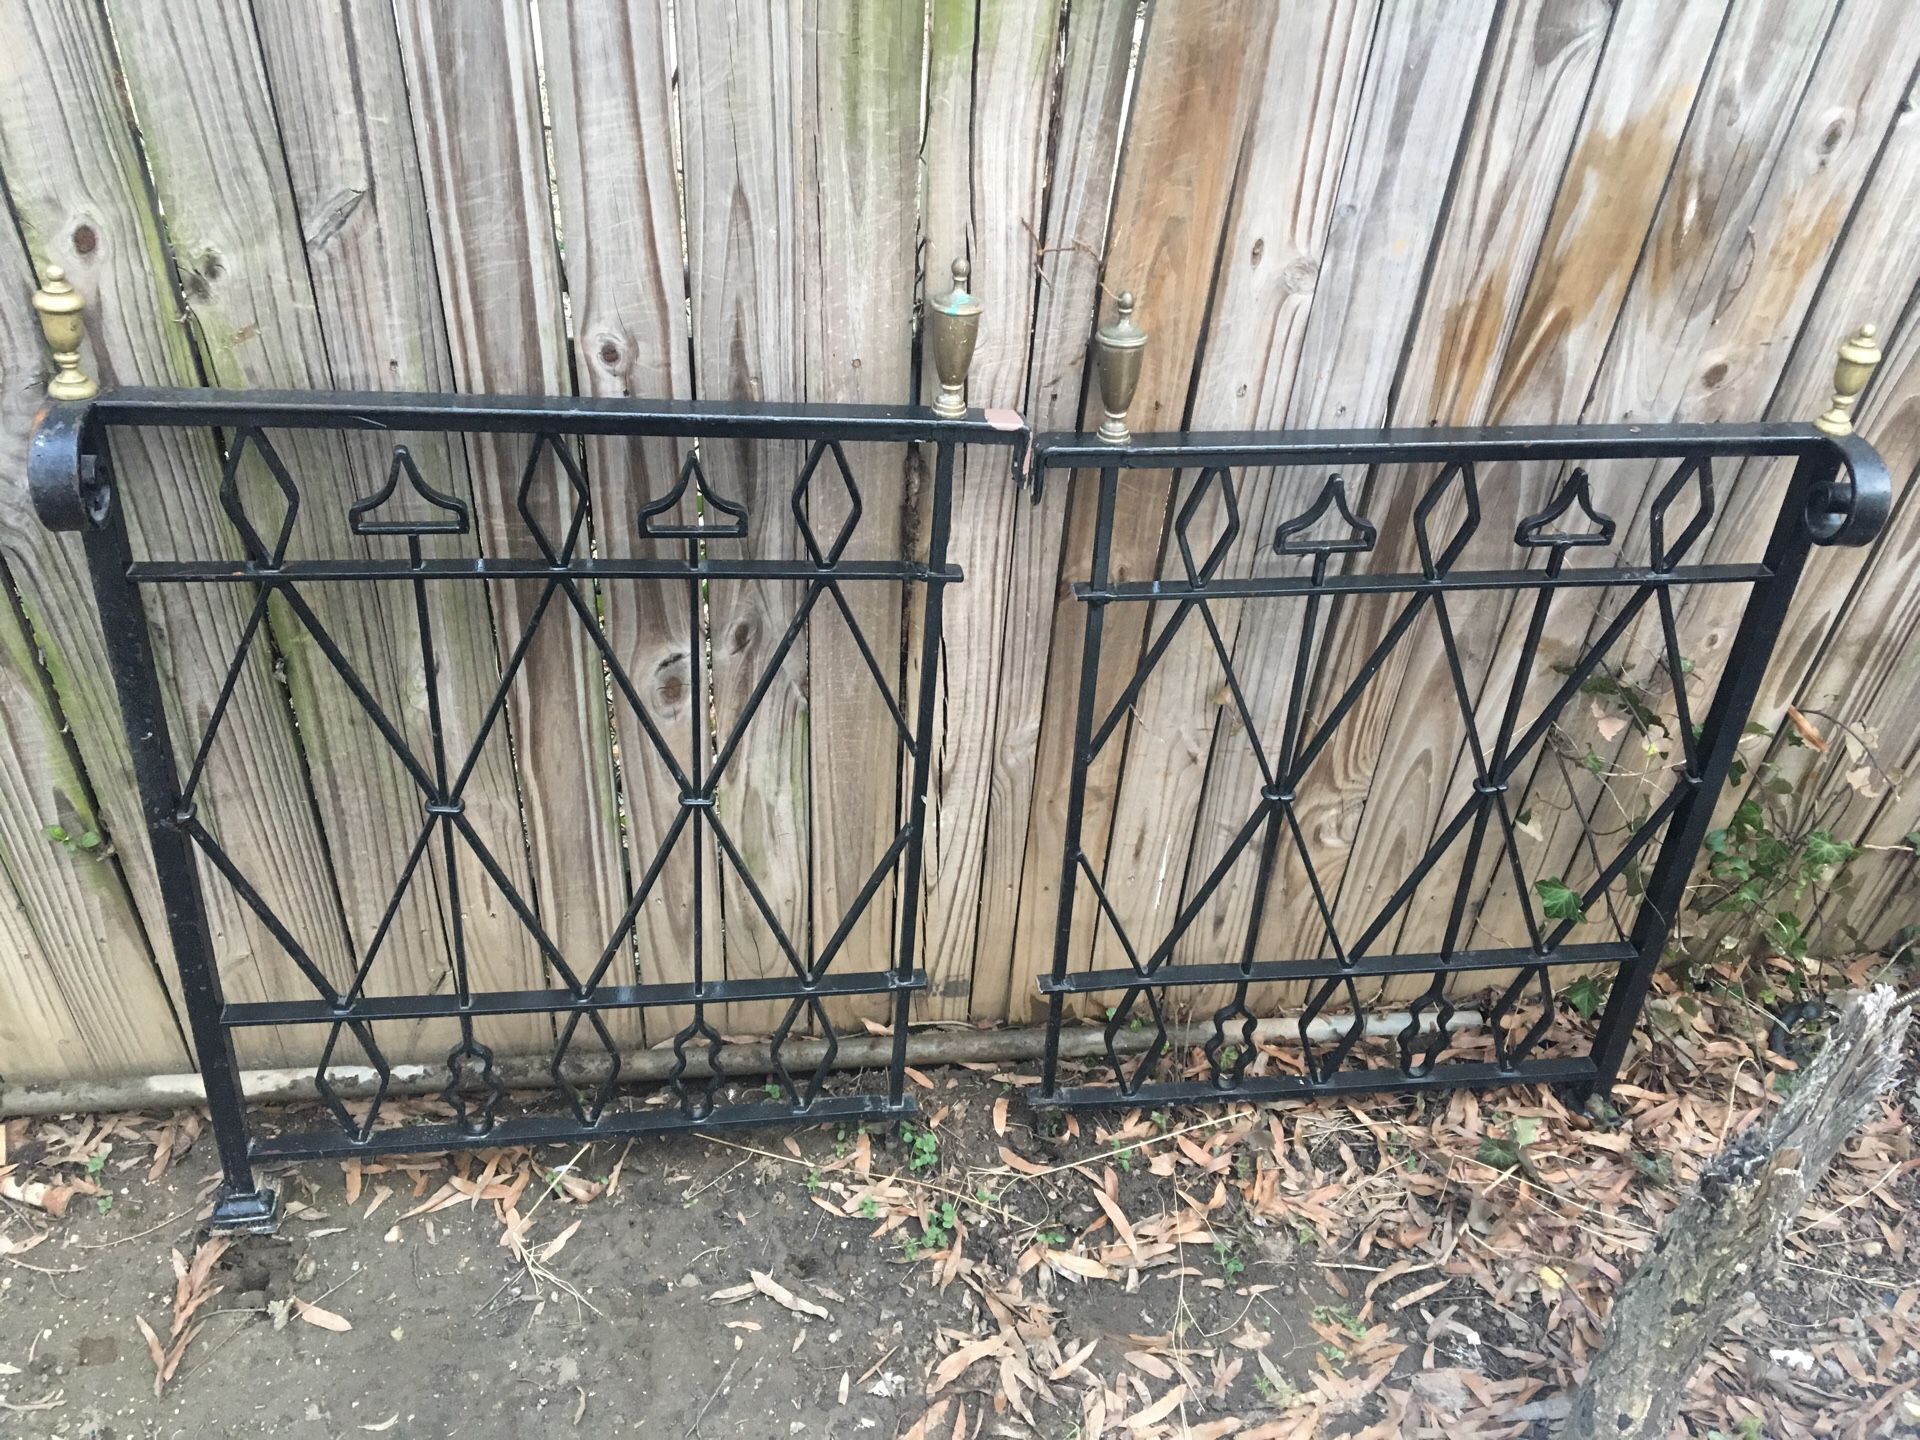 Iron & brass railings/ fence 2 pieces / vintage ironworks antique !